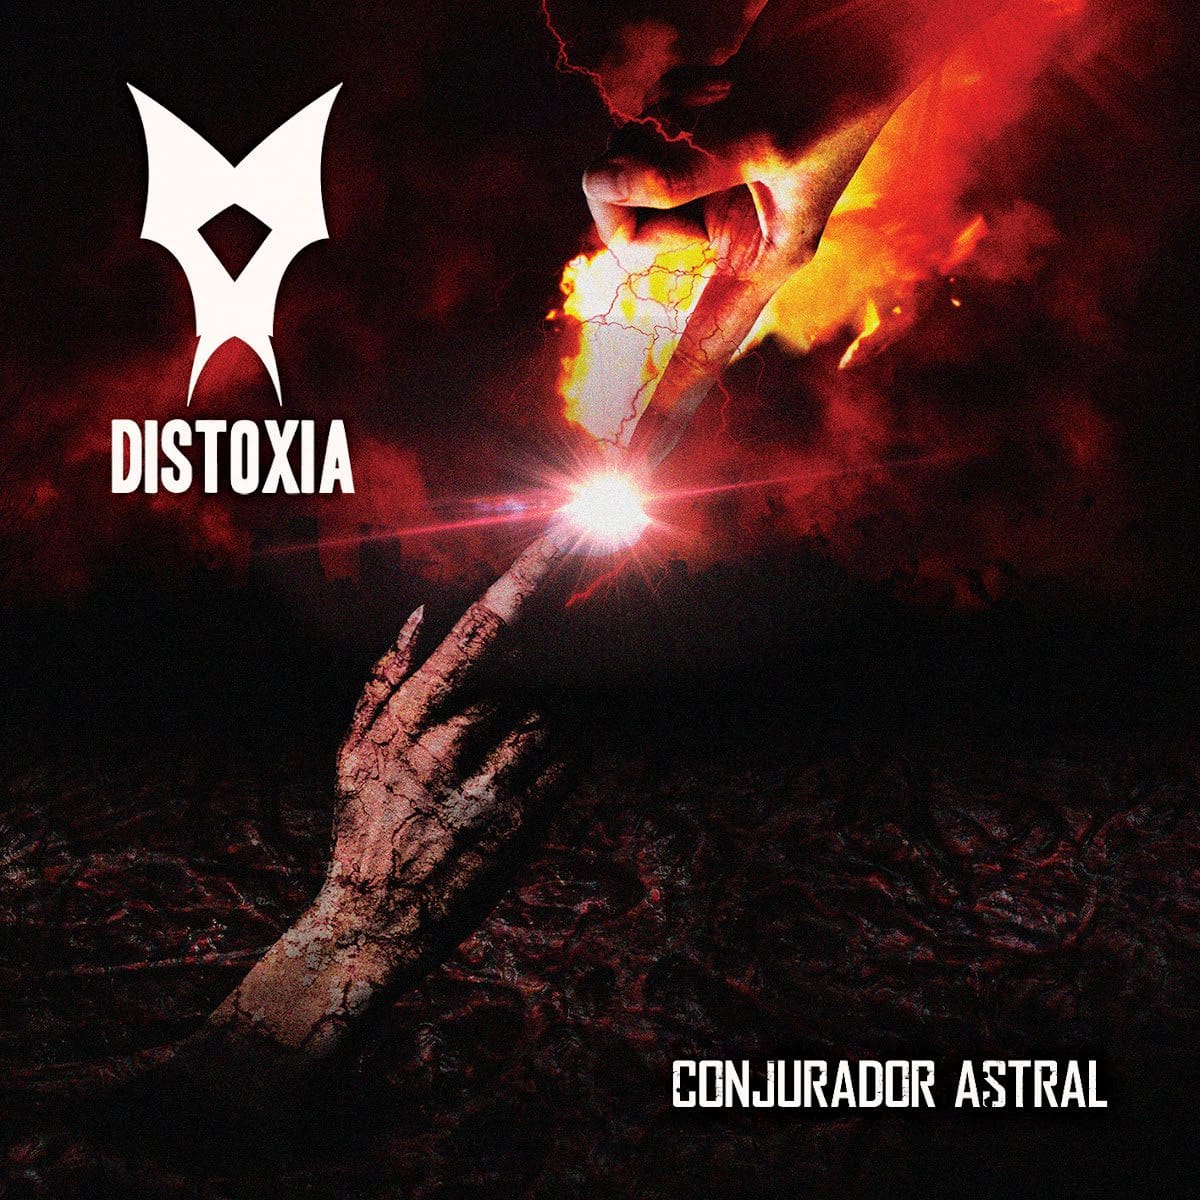 Distoxia announces comeback with new single: 'Conjurador Astral' - preview here